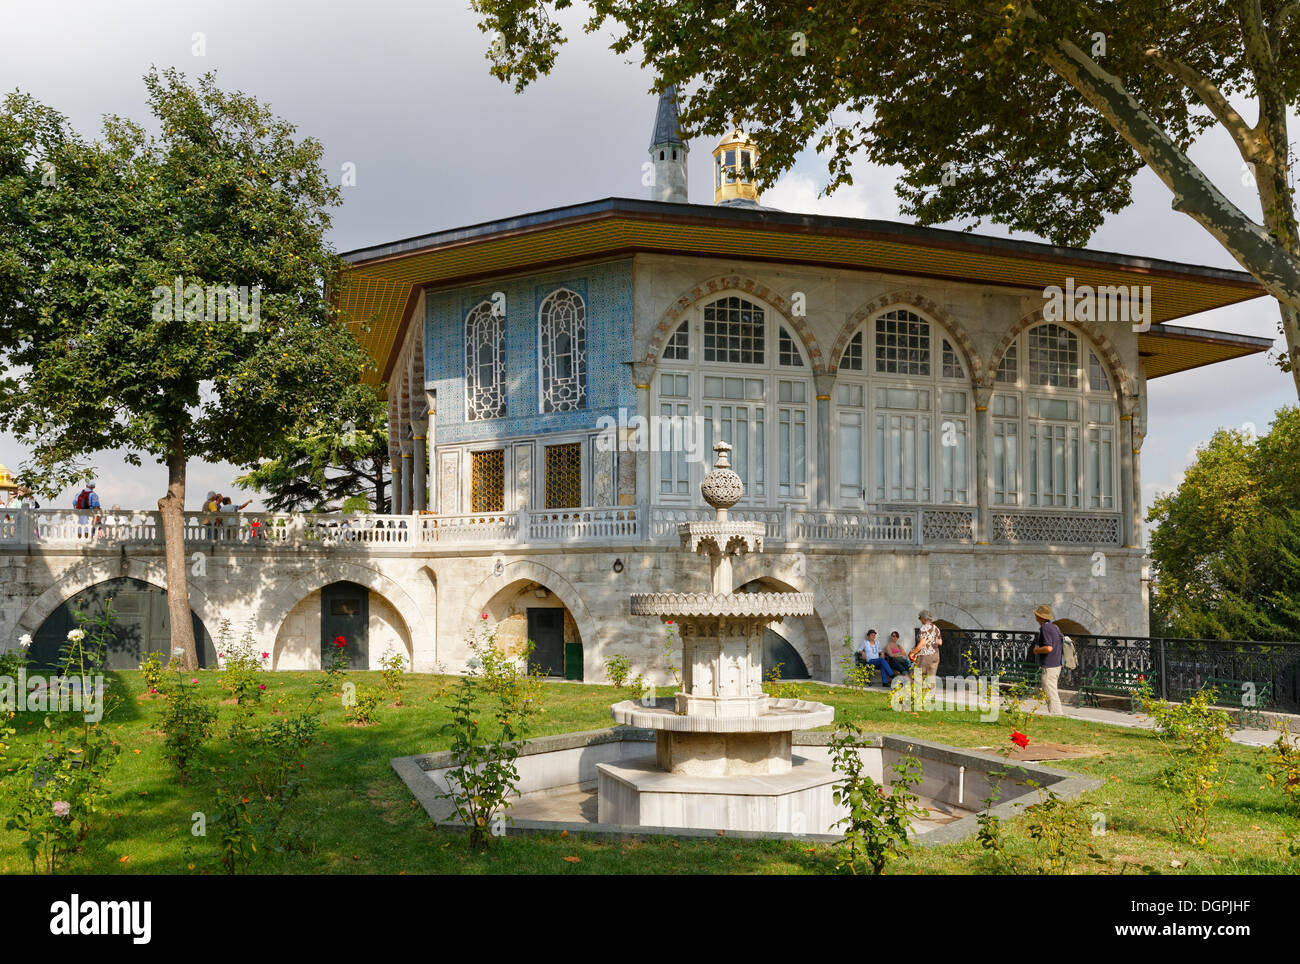 Baghdad Pavilion or Kiosk, fourth courtyard, Topkapi Palace, Topkapı Sarayı, Topkapi-Sarayi, Sultanahmet, Istanbul Stock Photo